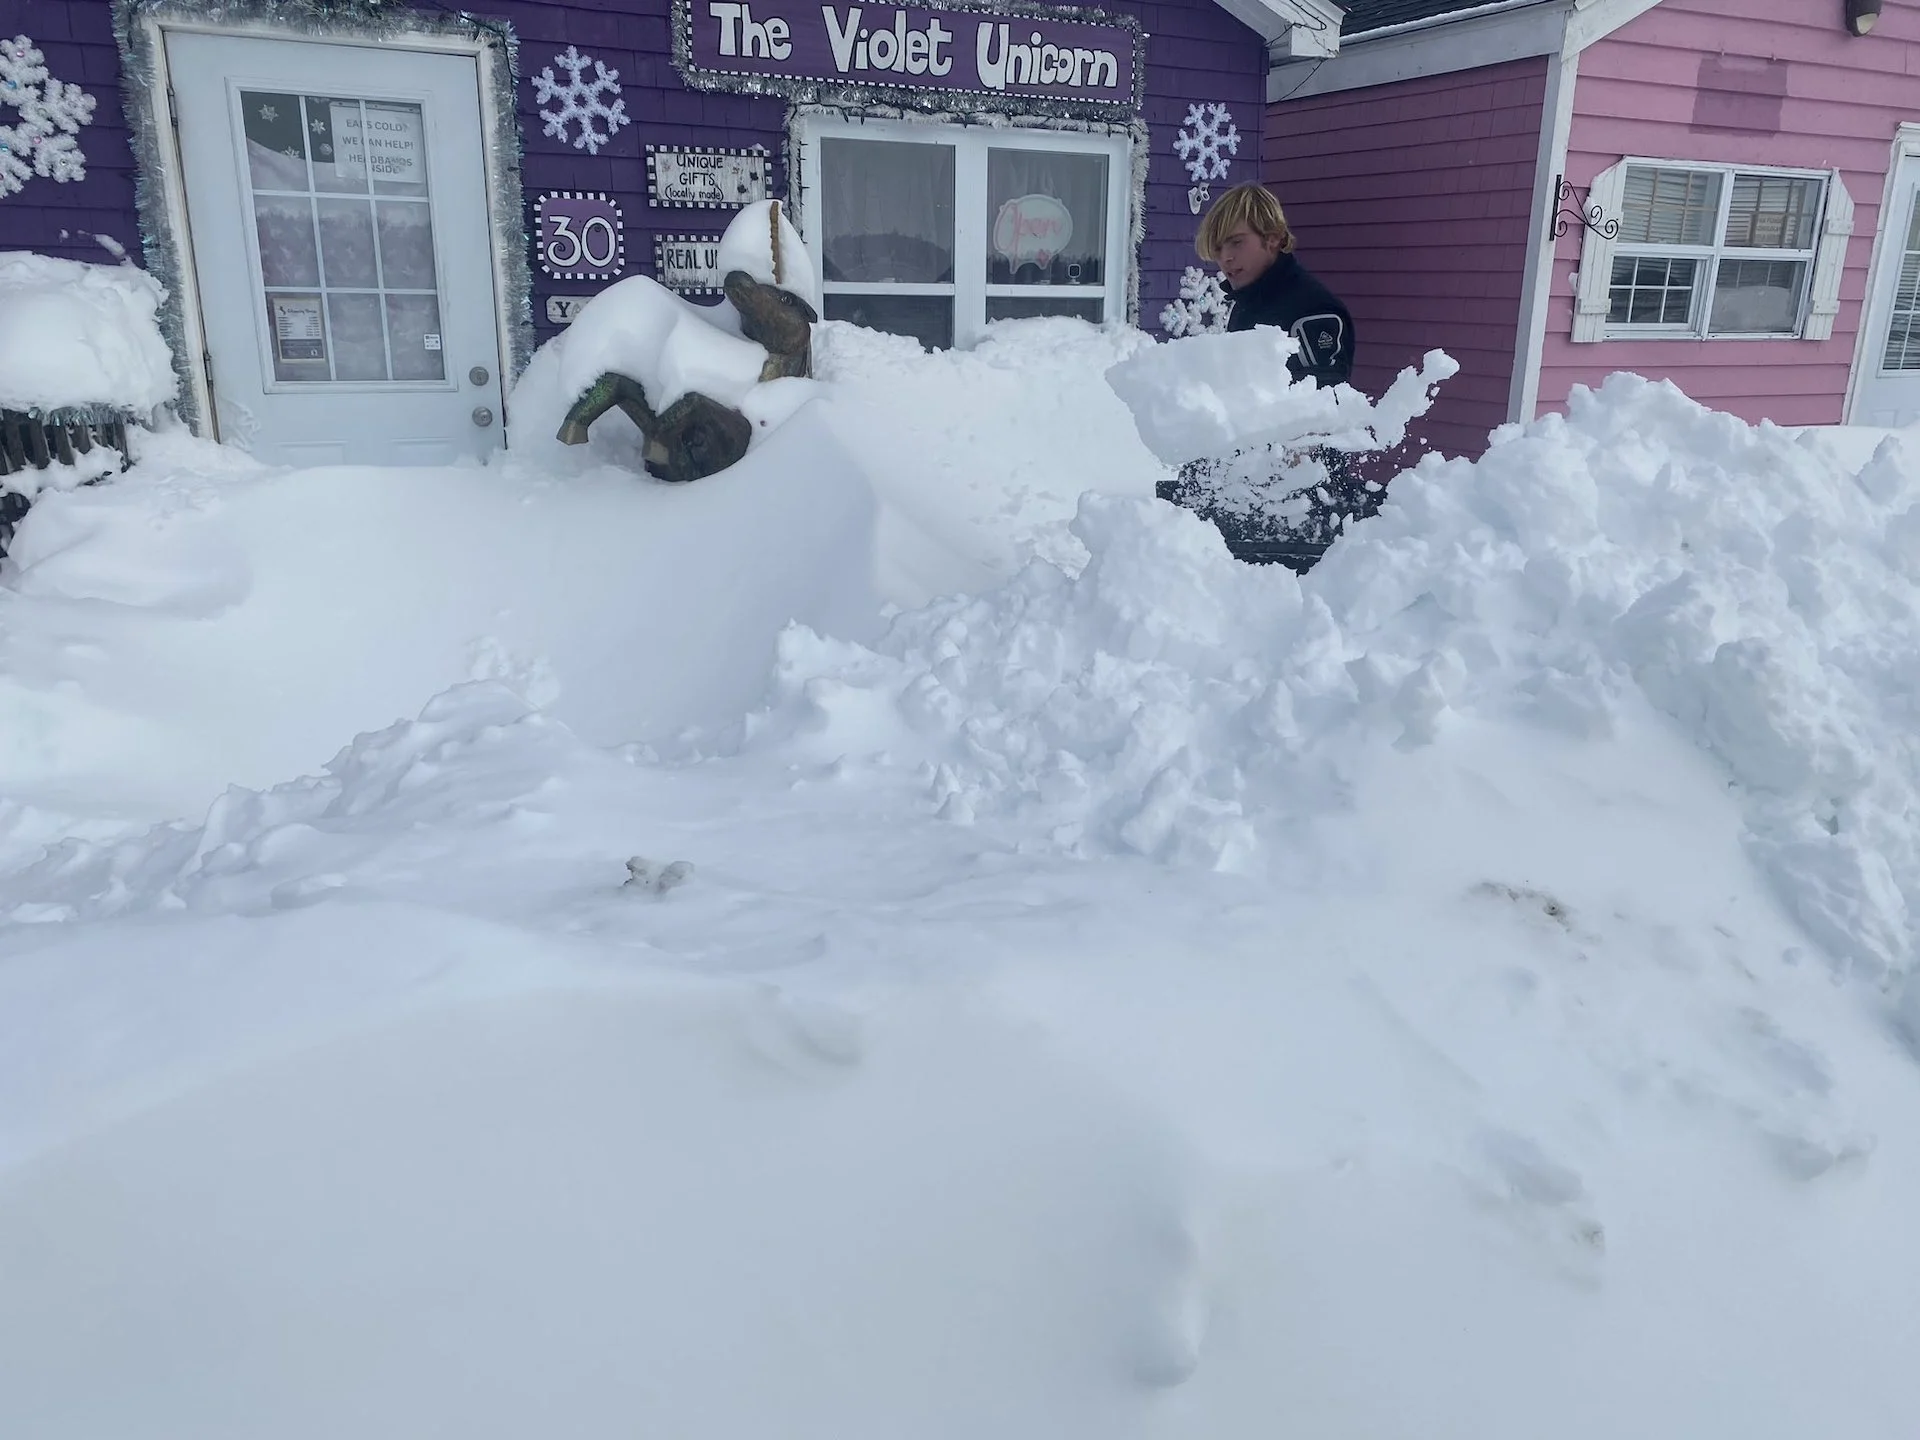 Nova Scotia digs out after epic snowfall as storm heads to Newfoundland